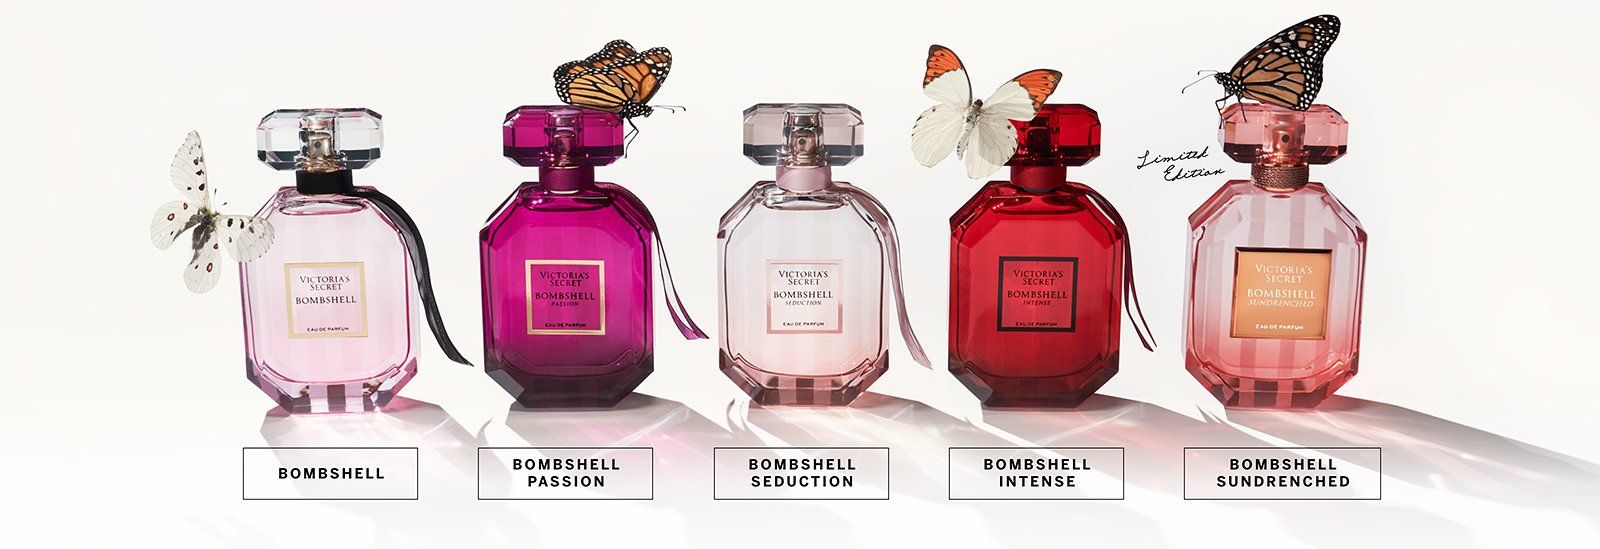 Victoria Secret Perfume Incredible